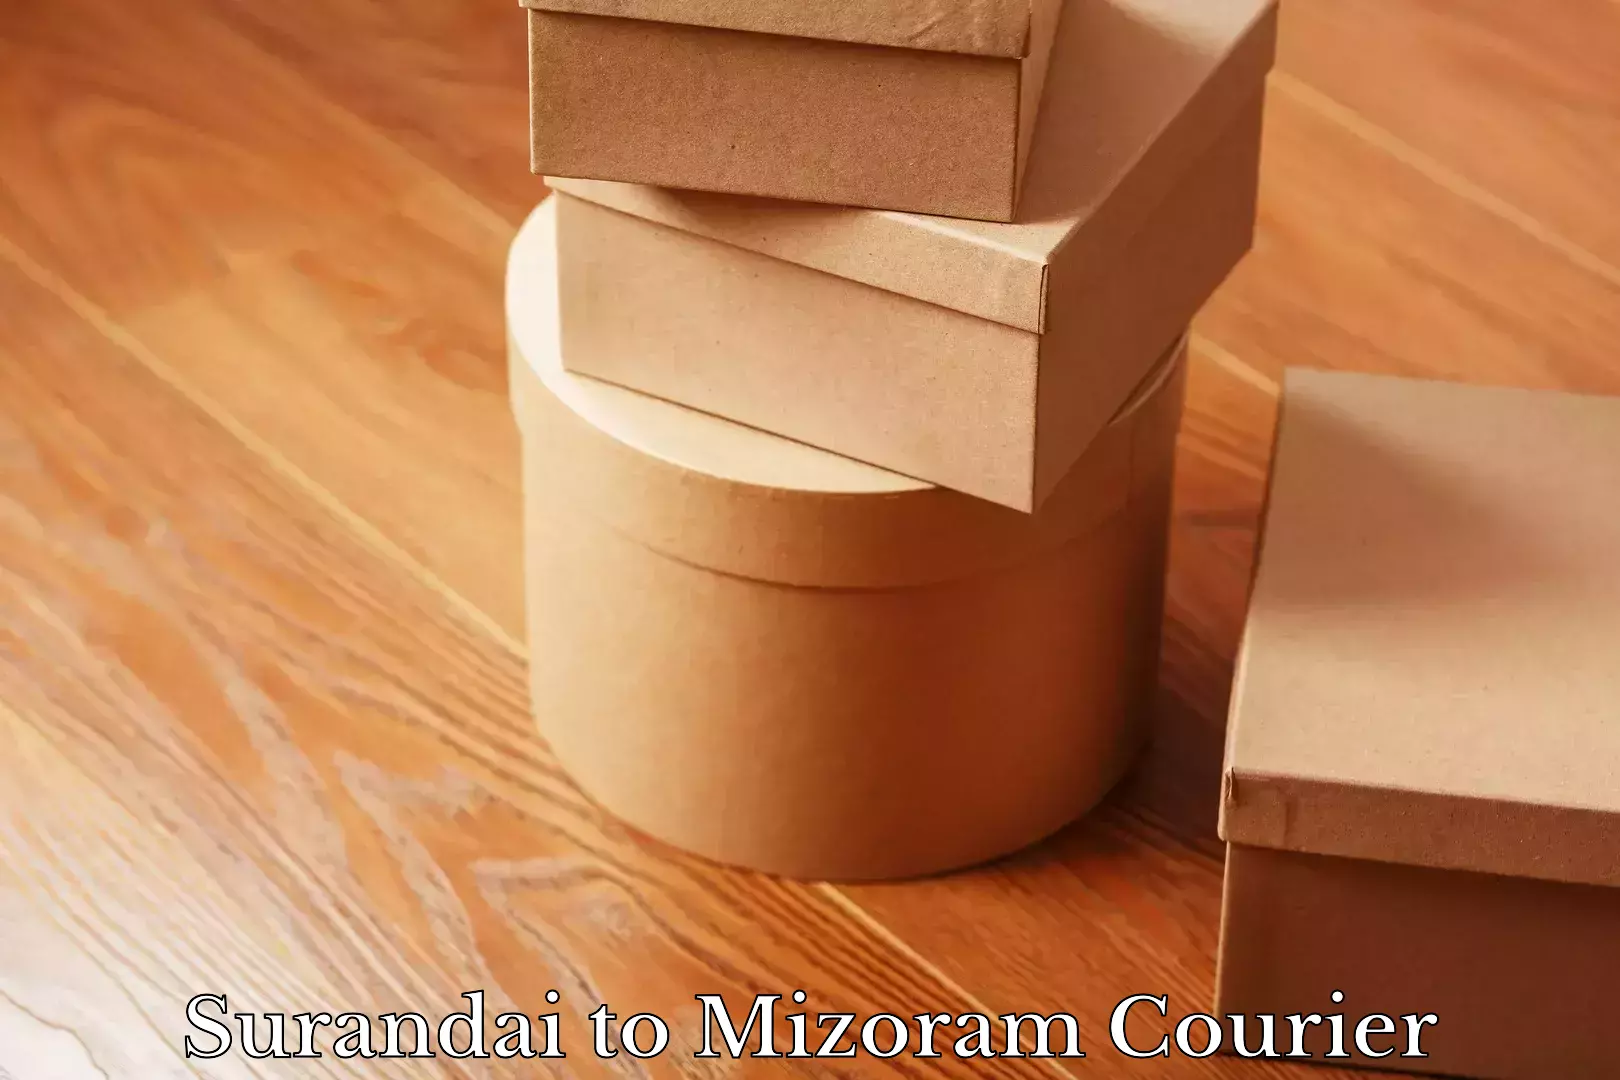 24-hour delivery options Surandai to Mizoram